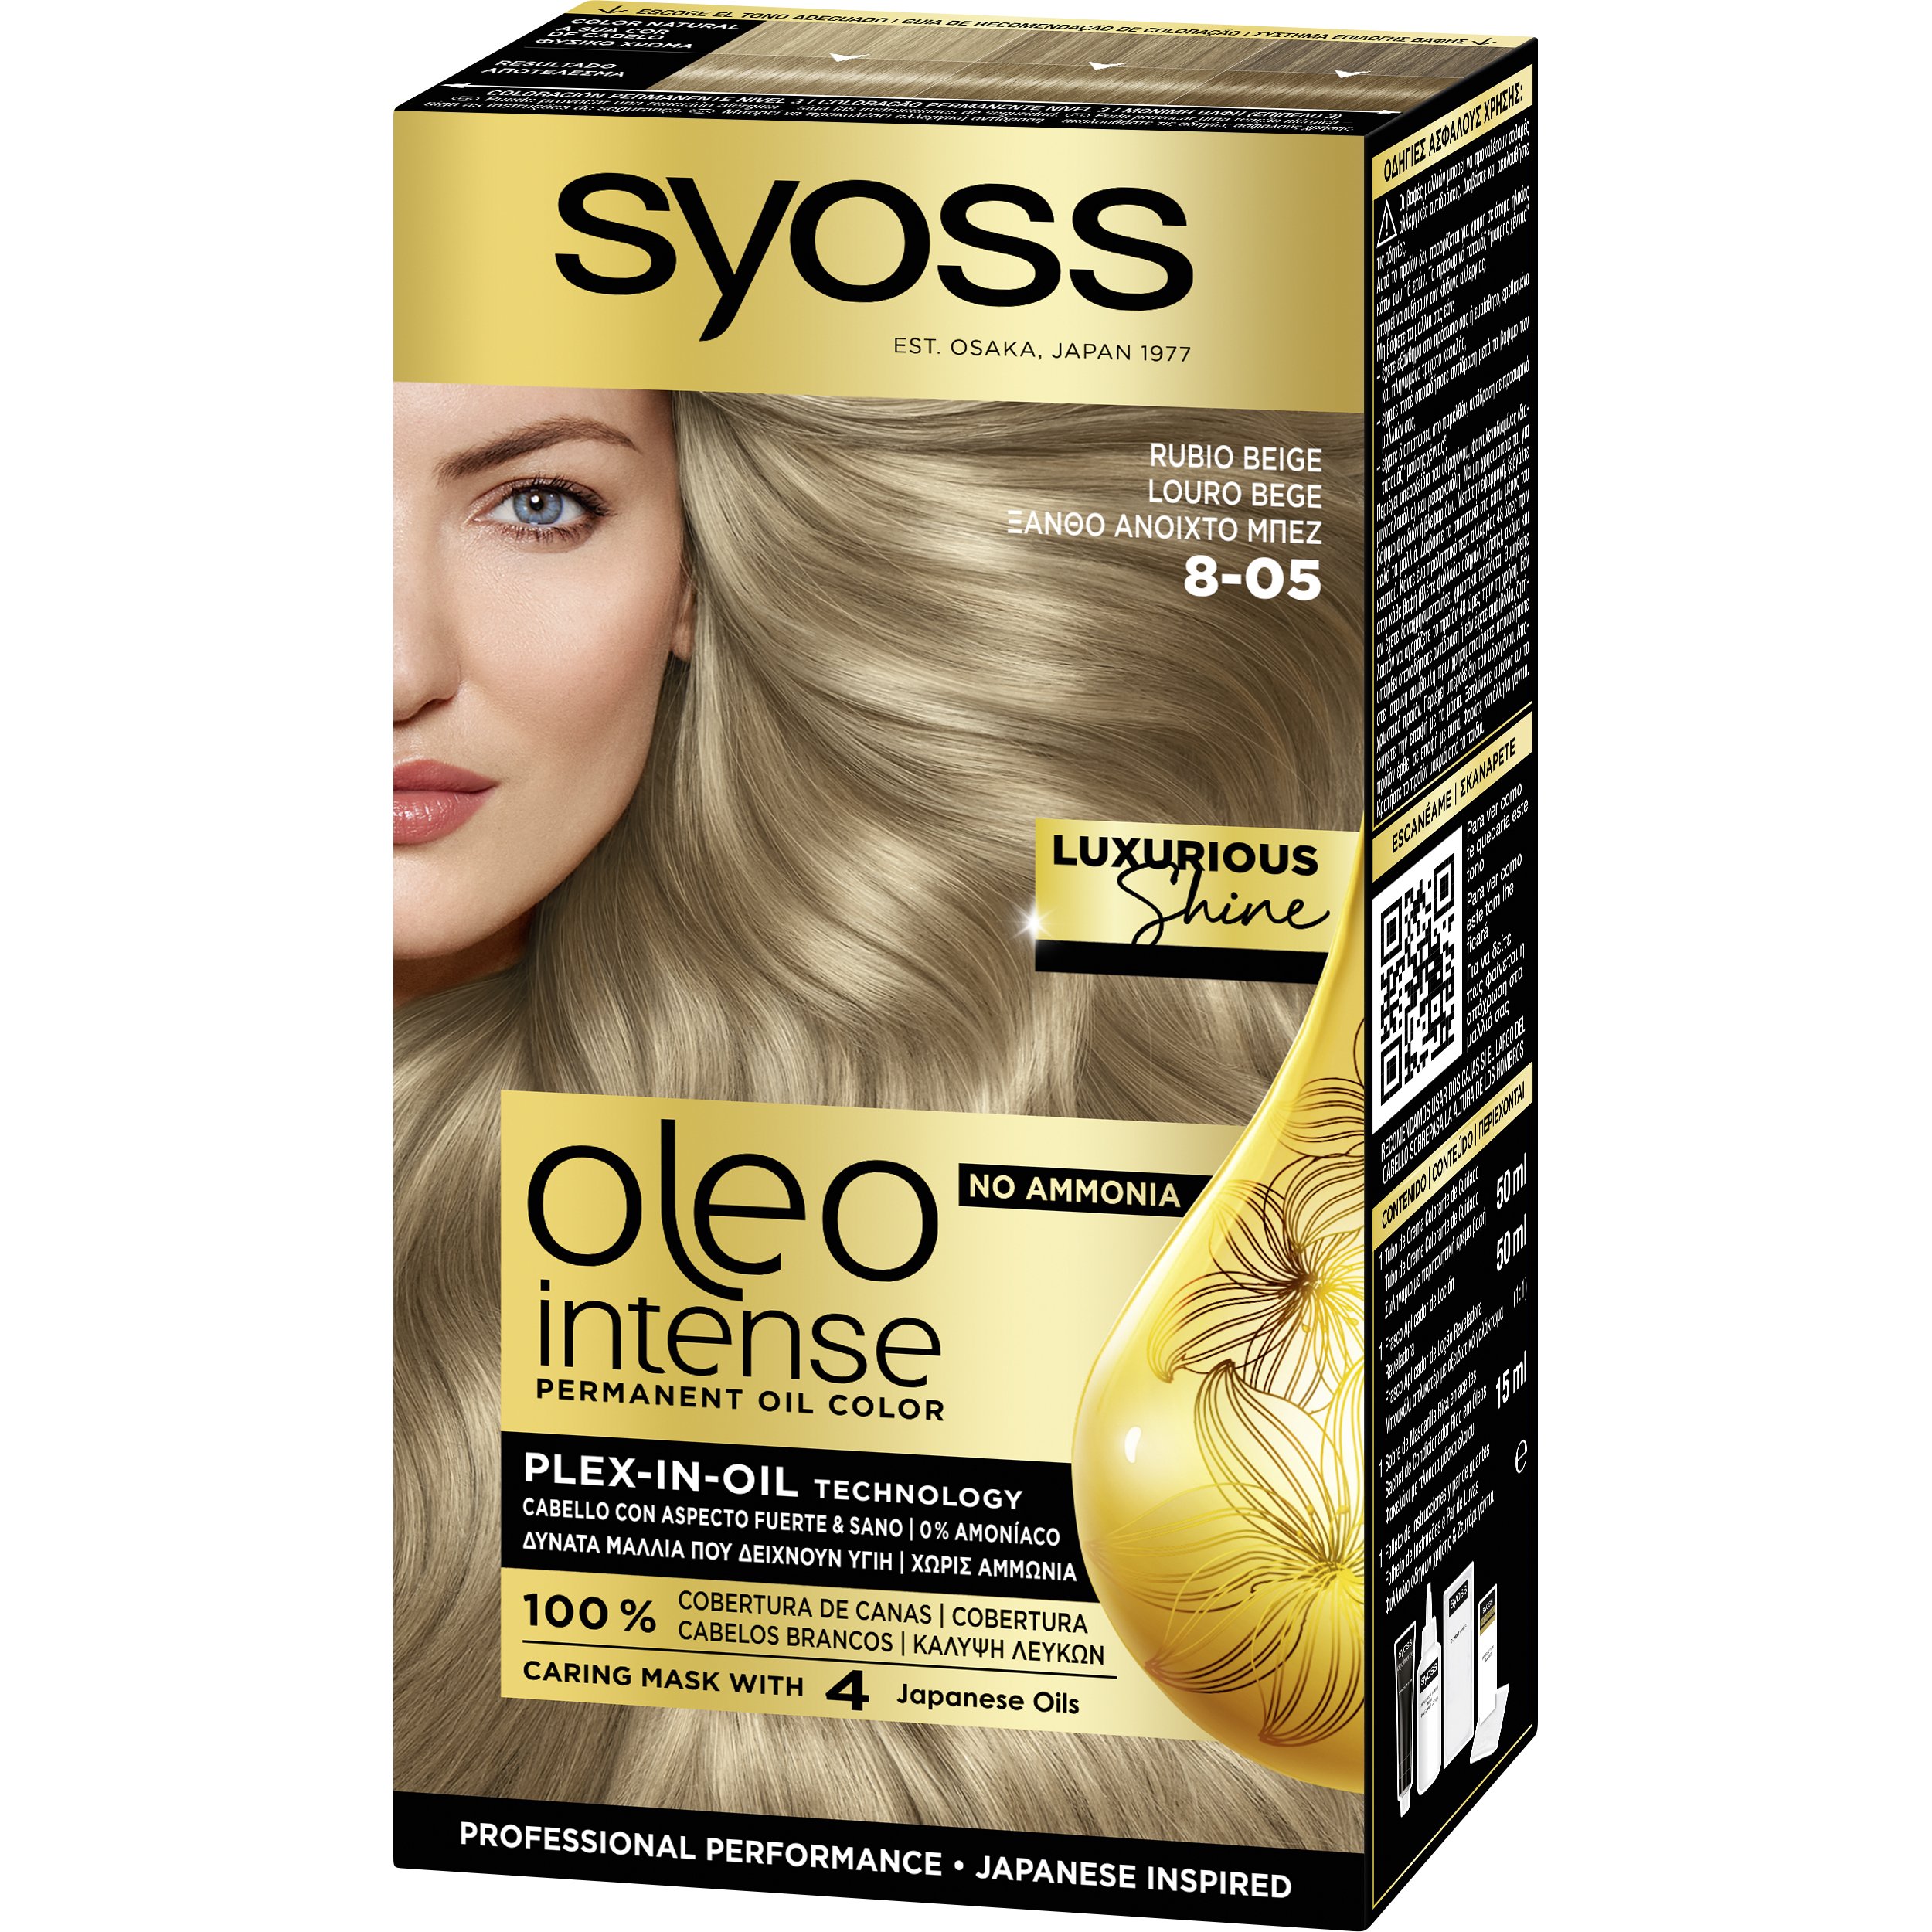 Syoss Syoss Oleo Intense Permanent Oil Hair Color Kit Επαγγελματική Μόνιμη Βαφή Μαλλιών για Εξαιρετική Κάλυψη & Έντονο Χρώμα που Διαρκεί, Χωρίς Αμμωνία 1 Τεμάχιο - 8-05 Ξανθό Ανοιχτό Μπεζ